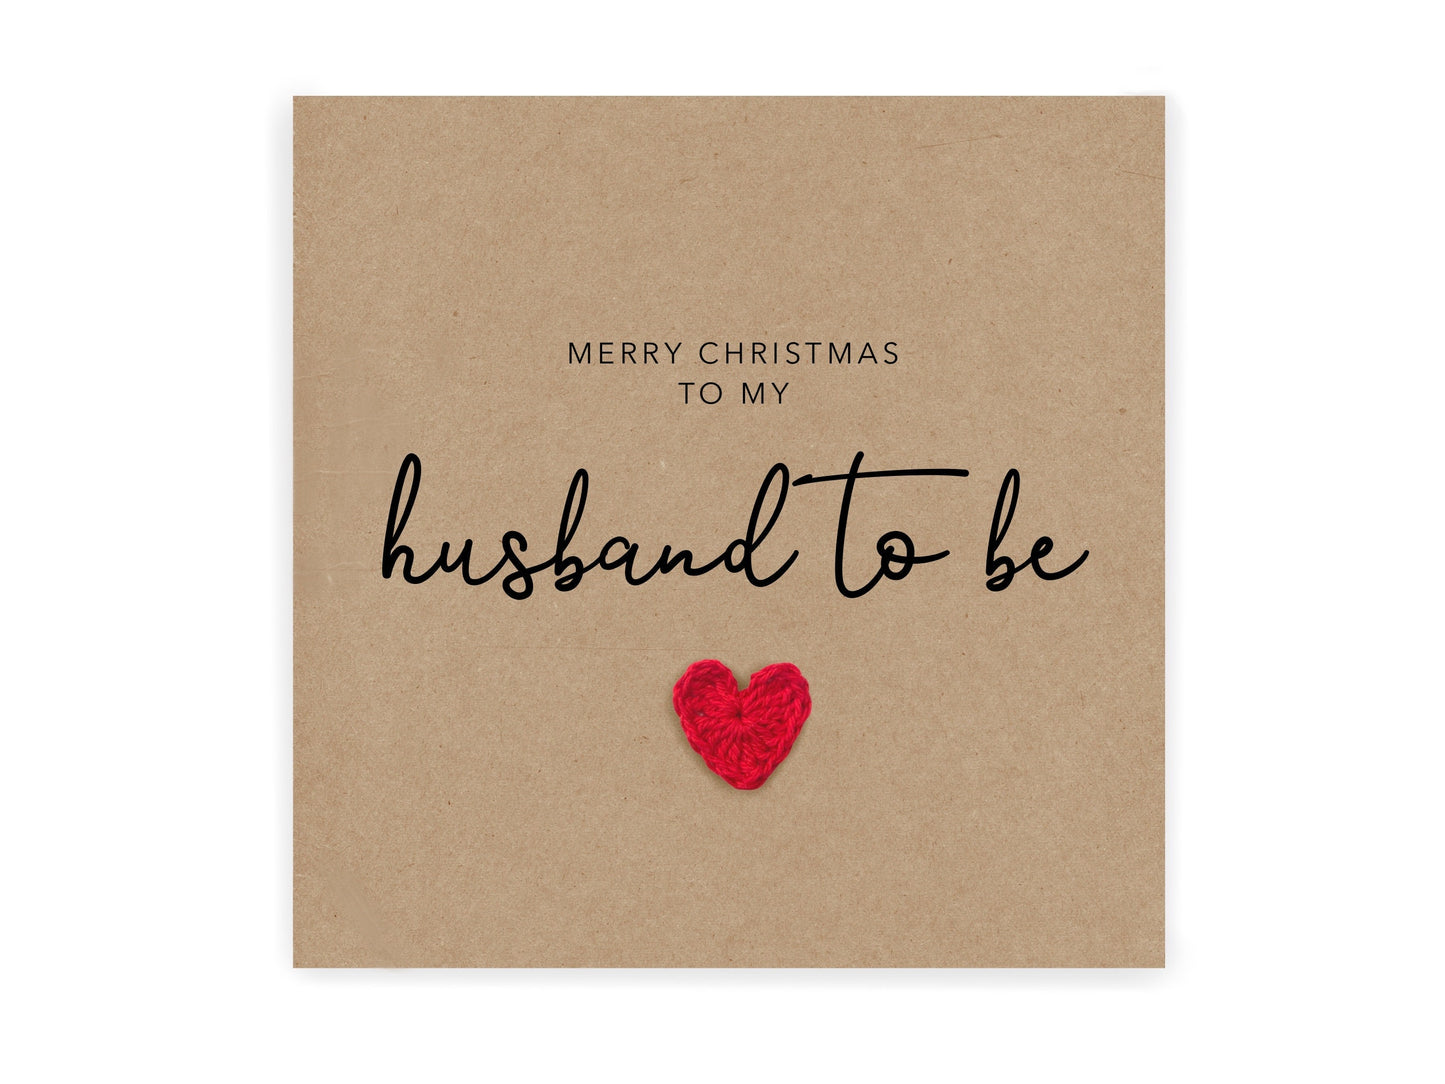 Merry Christmas Husband to be, Fiancee, Card, Christmas Card for Husband to be fiancé, Christmas Card